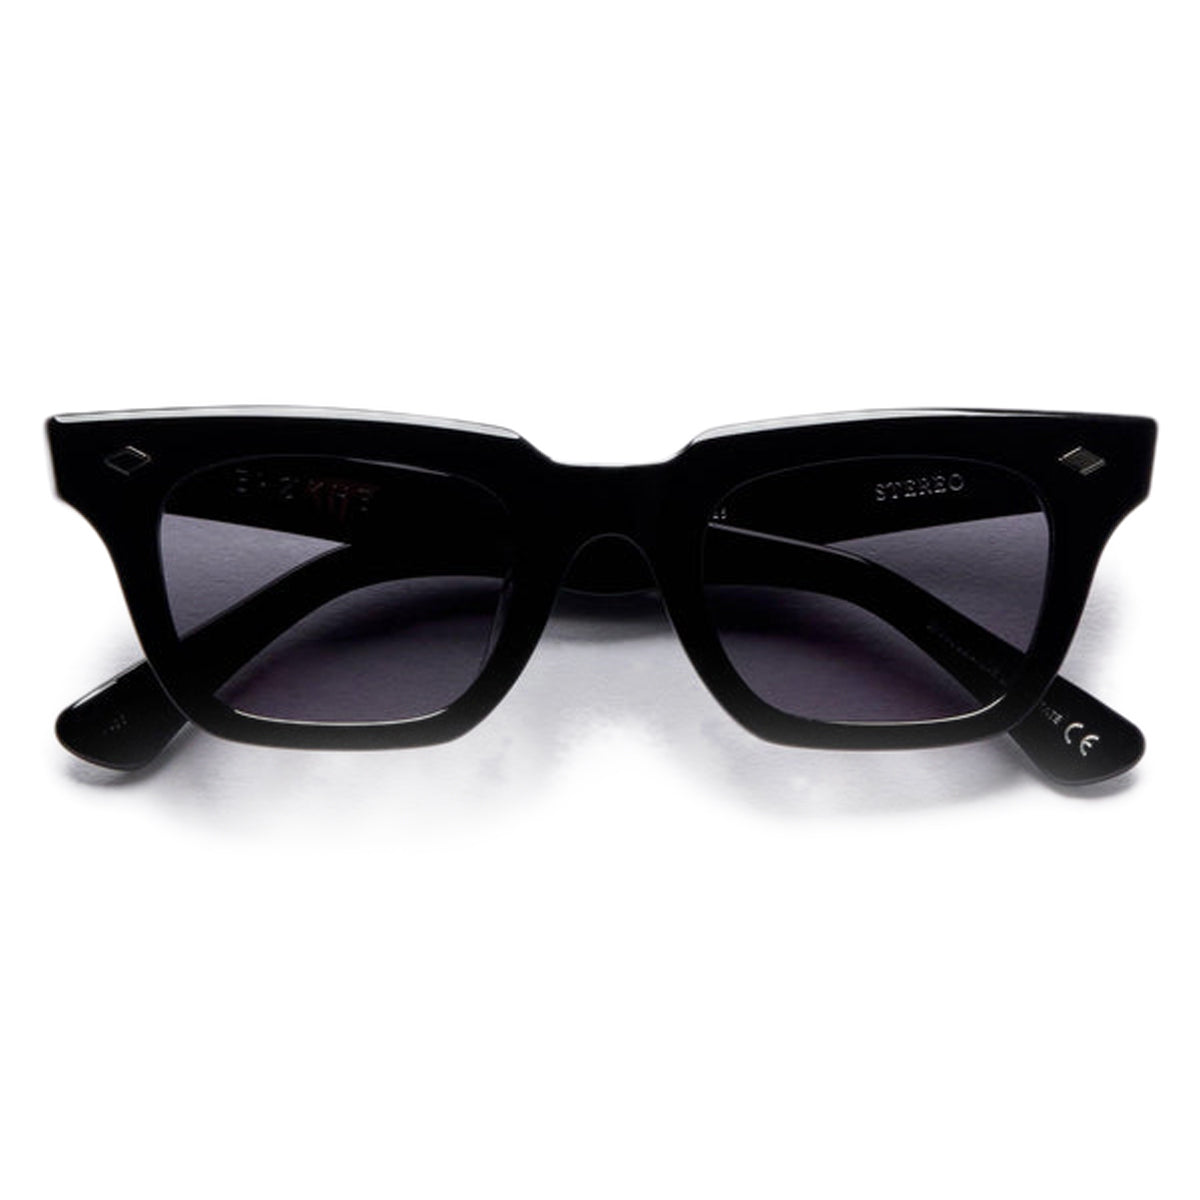 Epokhe Stereo Sunglasses - Black Polished/Black image 2